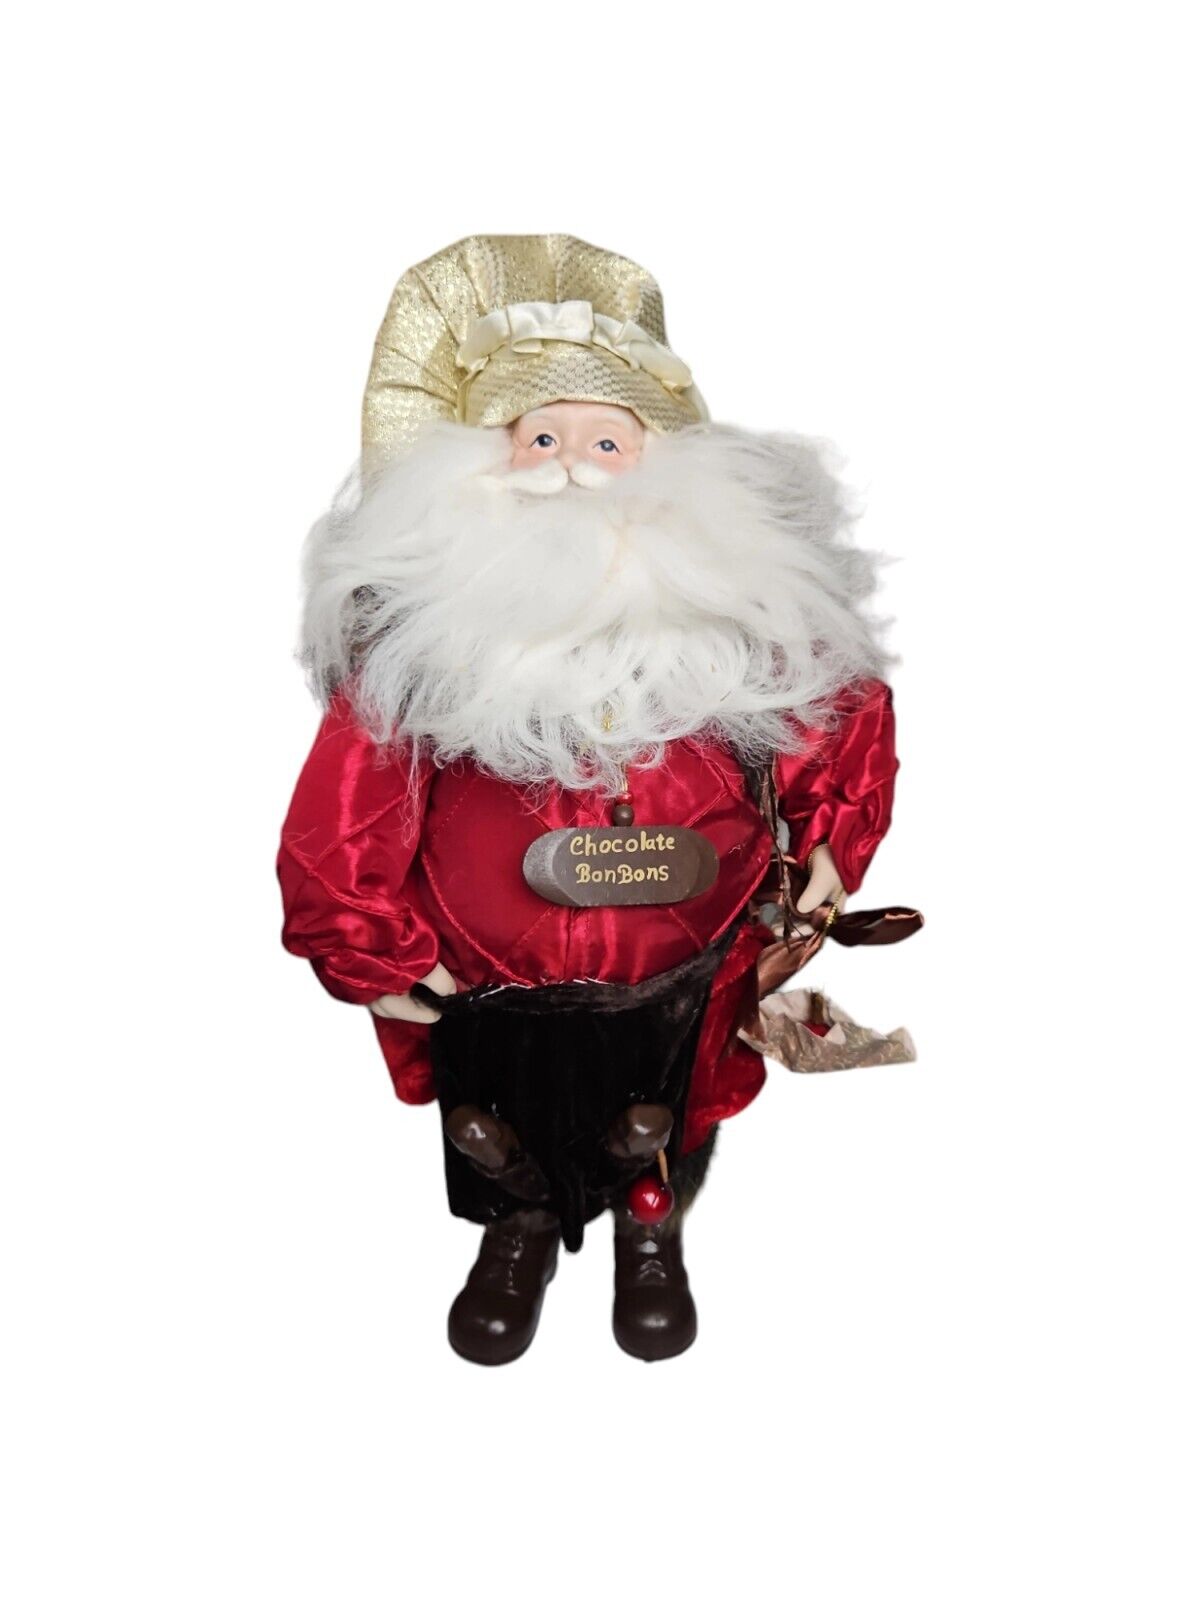 Vintage Chocolate Chef Santa Claus Christmas Figurine~Porcelain Face~ 17.5\